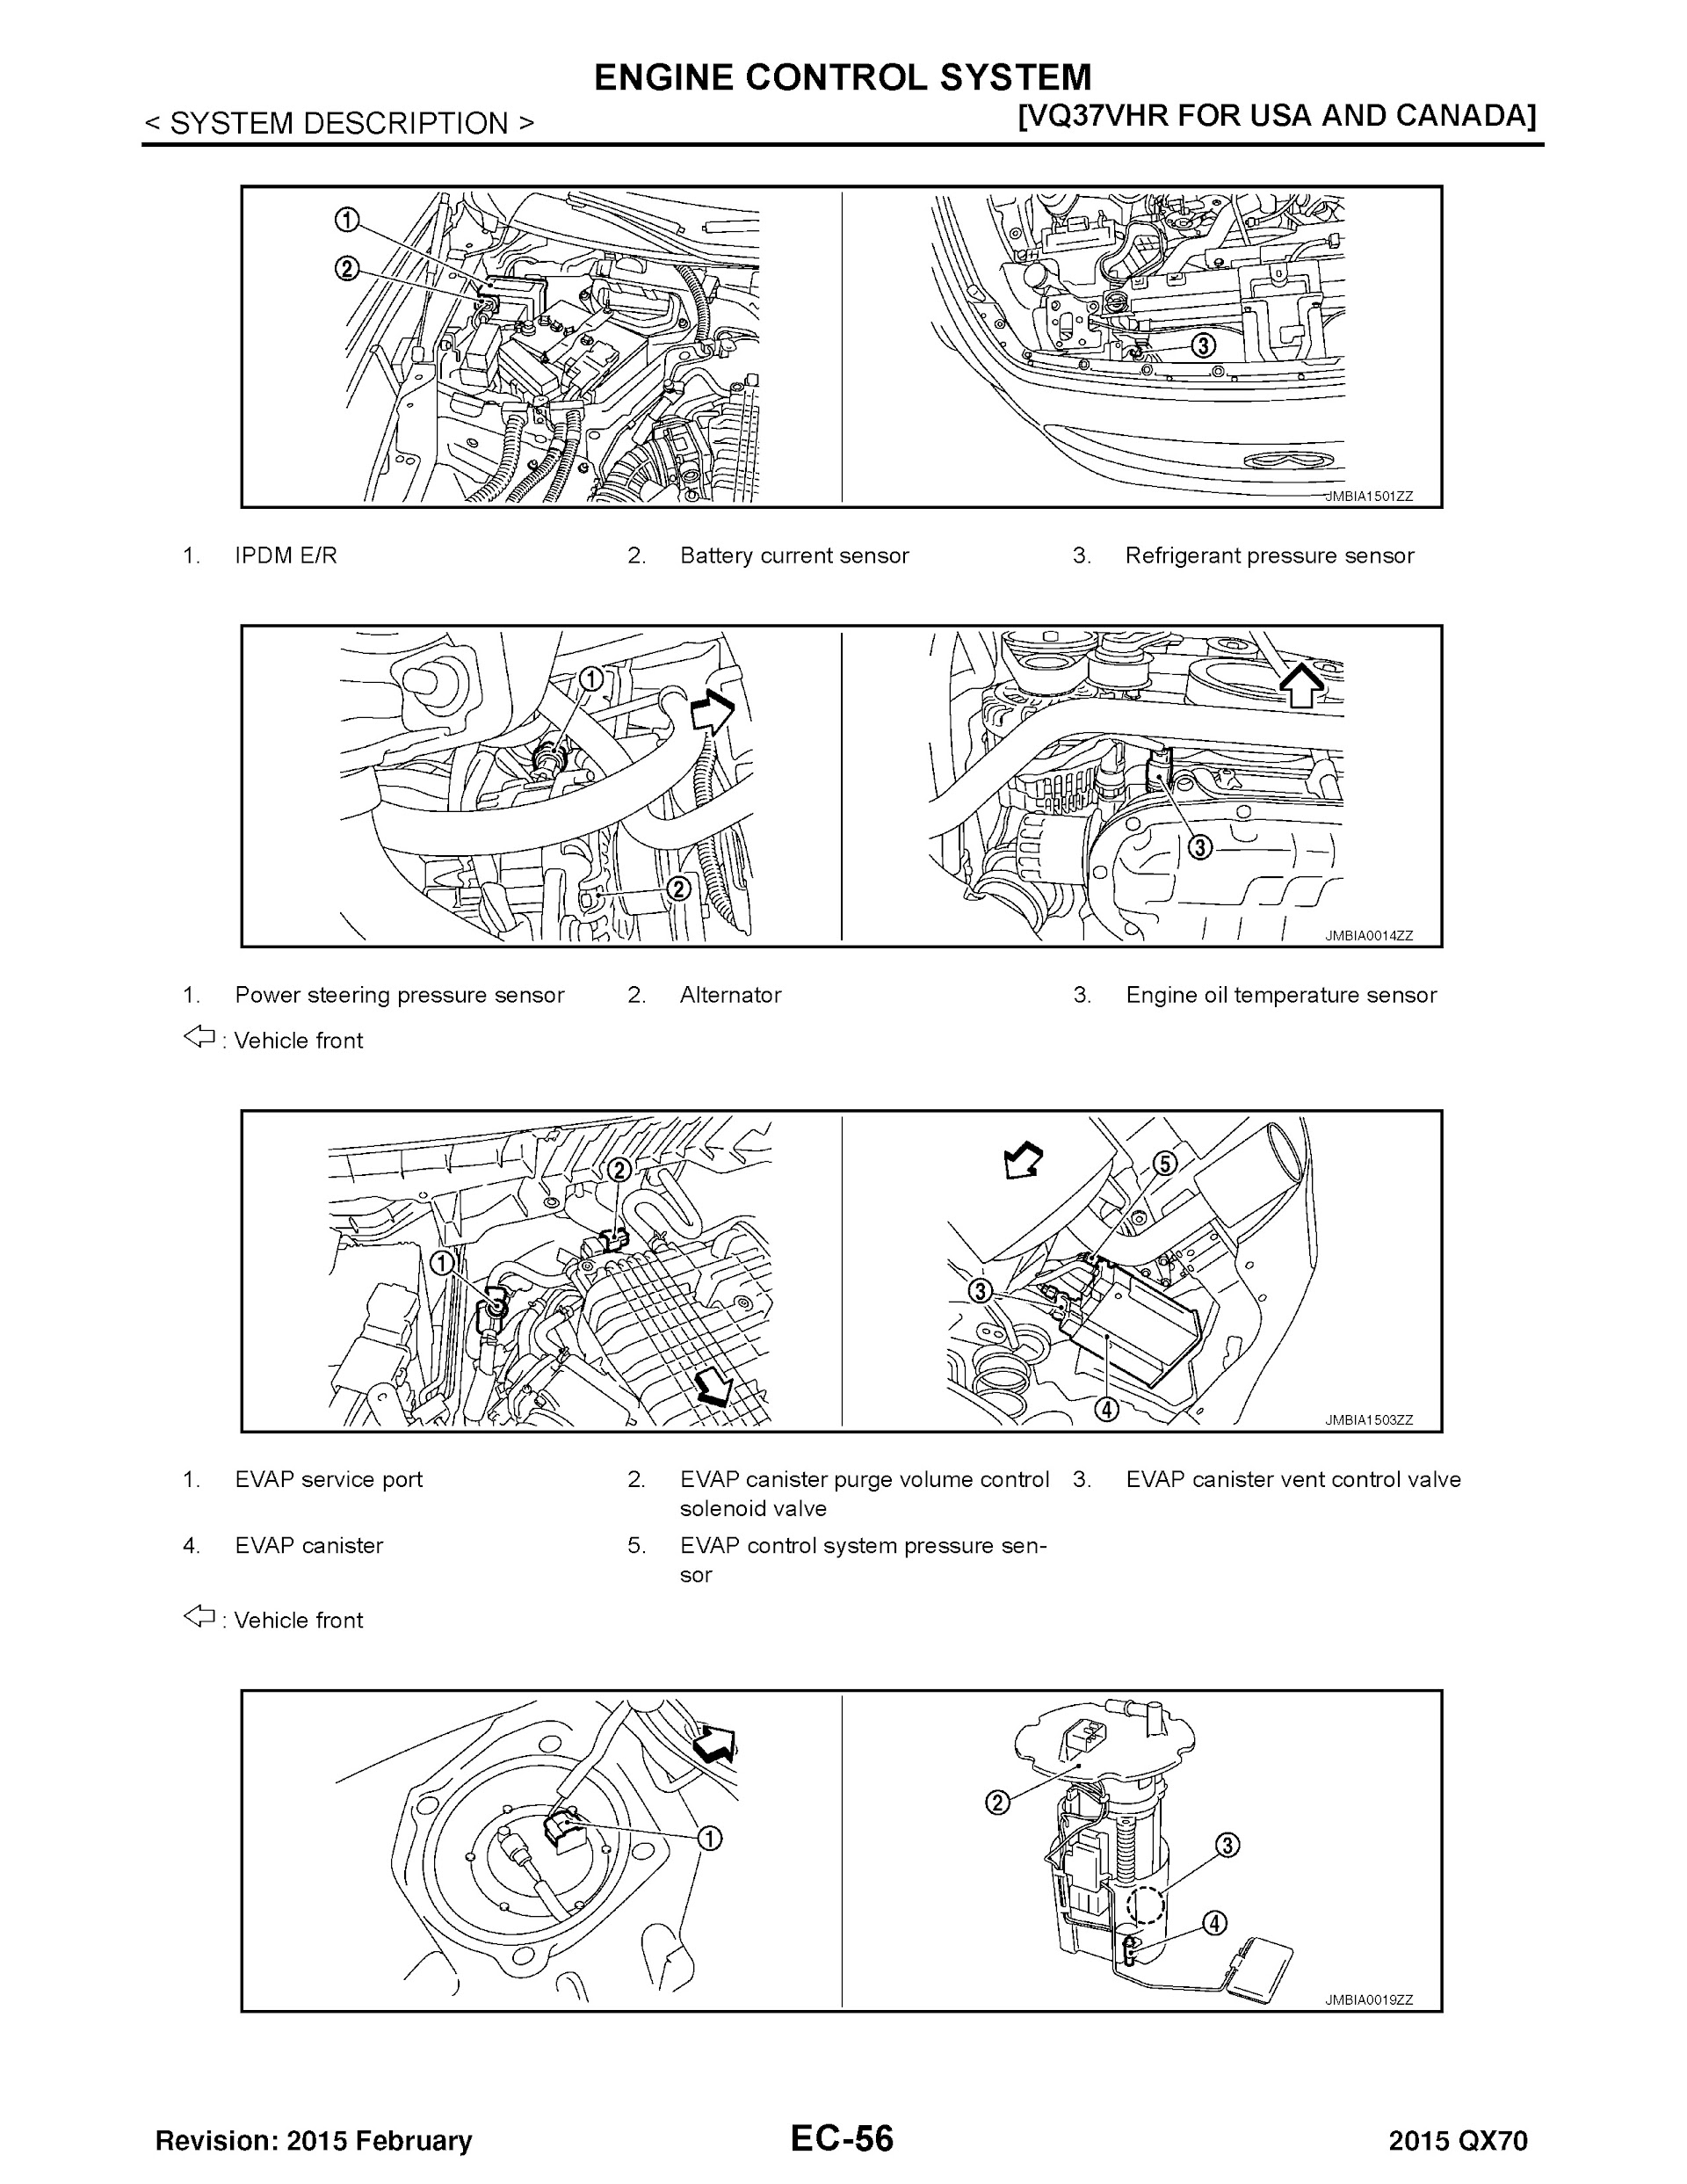 2015 Infiniti QX70 Repair Manual, Engine Control System